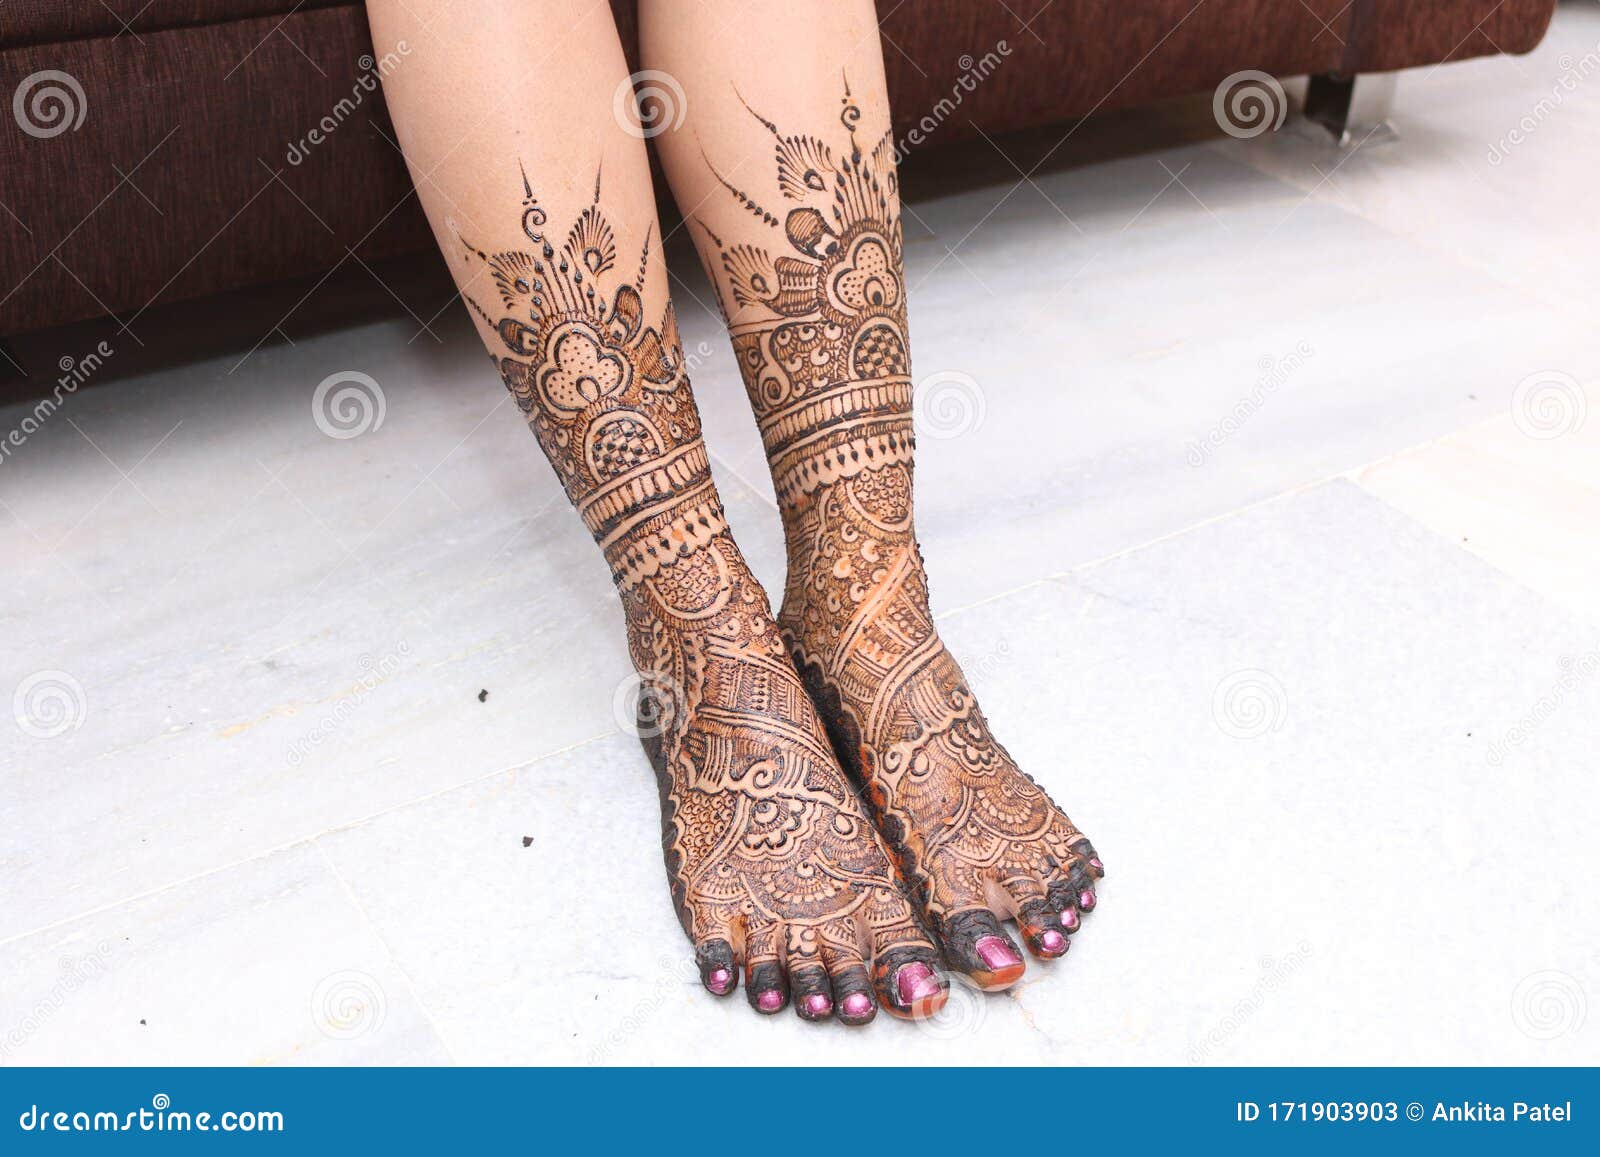 Leg Mehndi Design: Celebrating Beauty in Diversity - Fashionisk